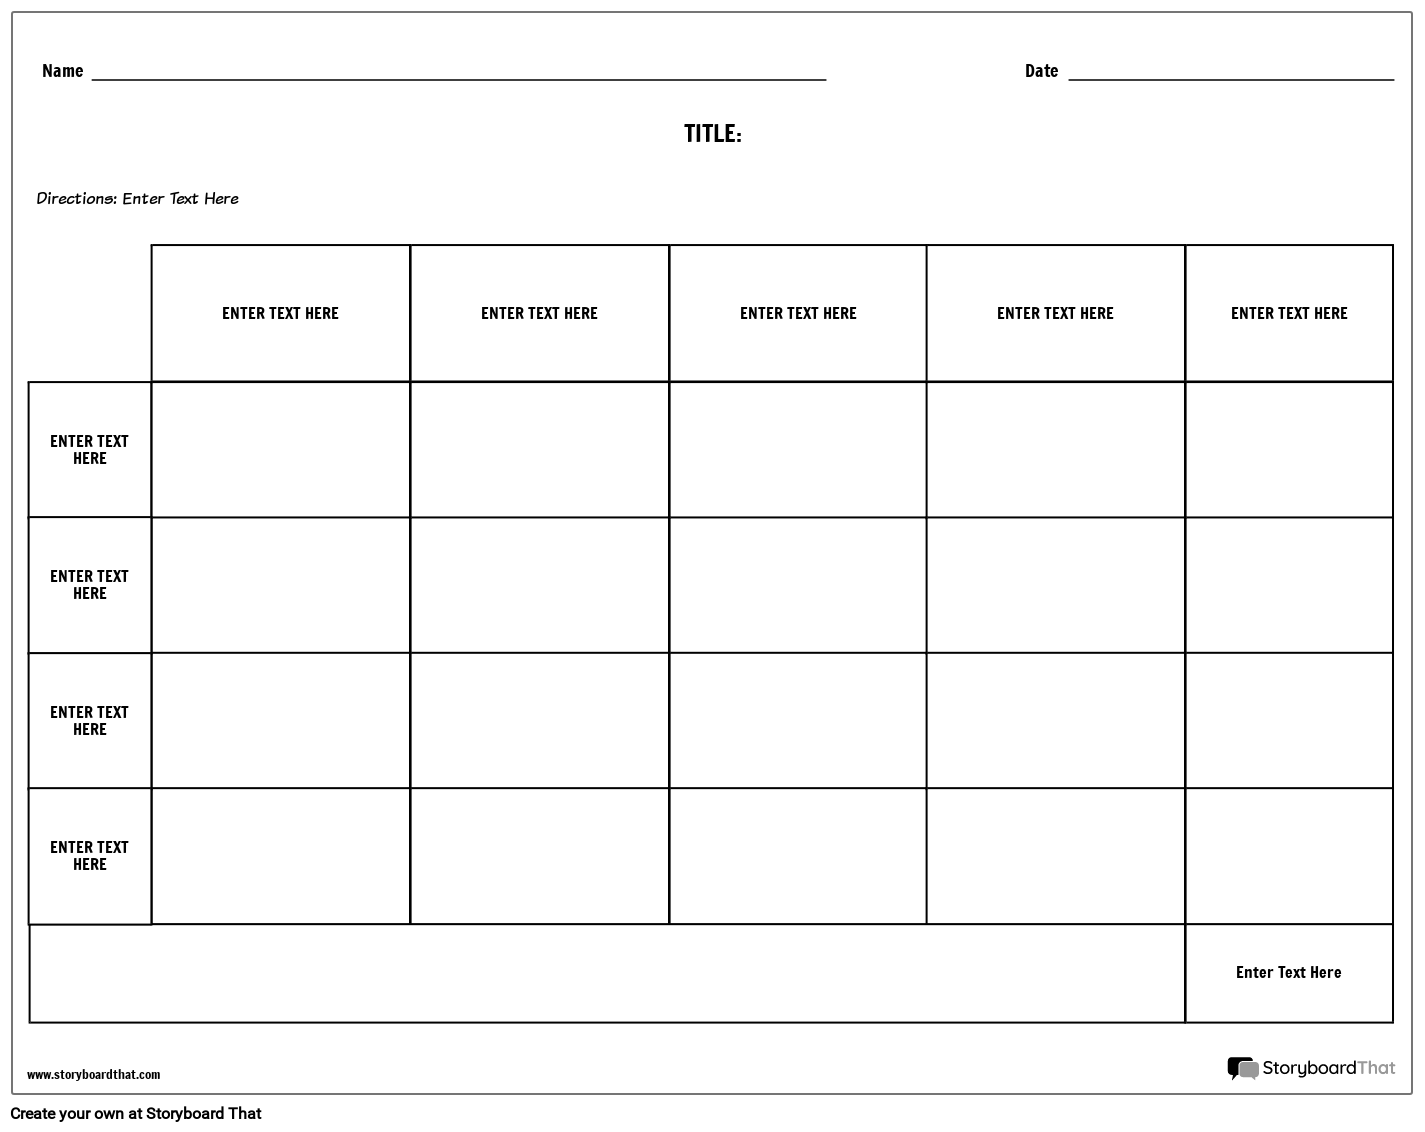 Simple Background Based Rubric Worksheet Template